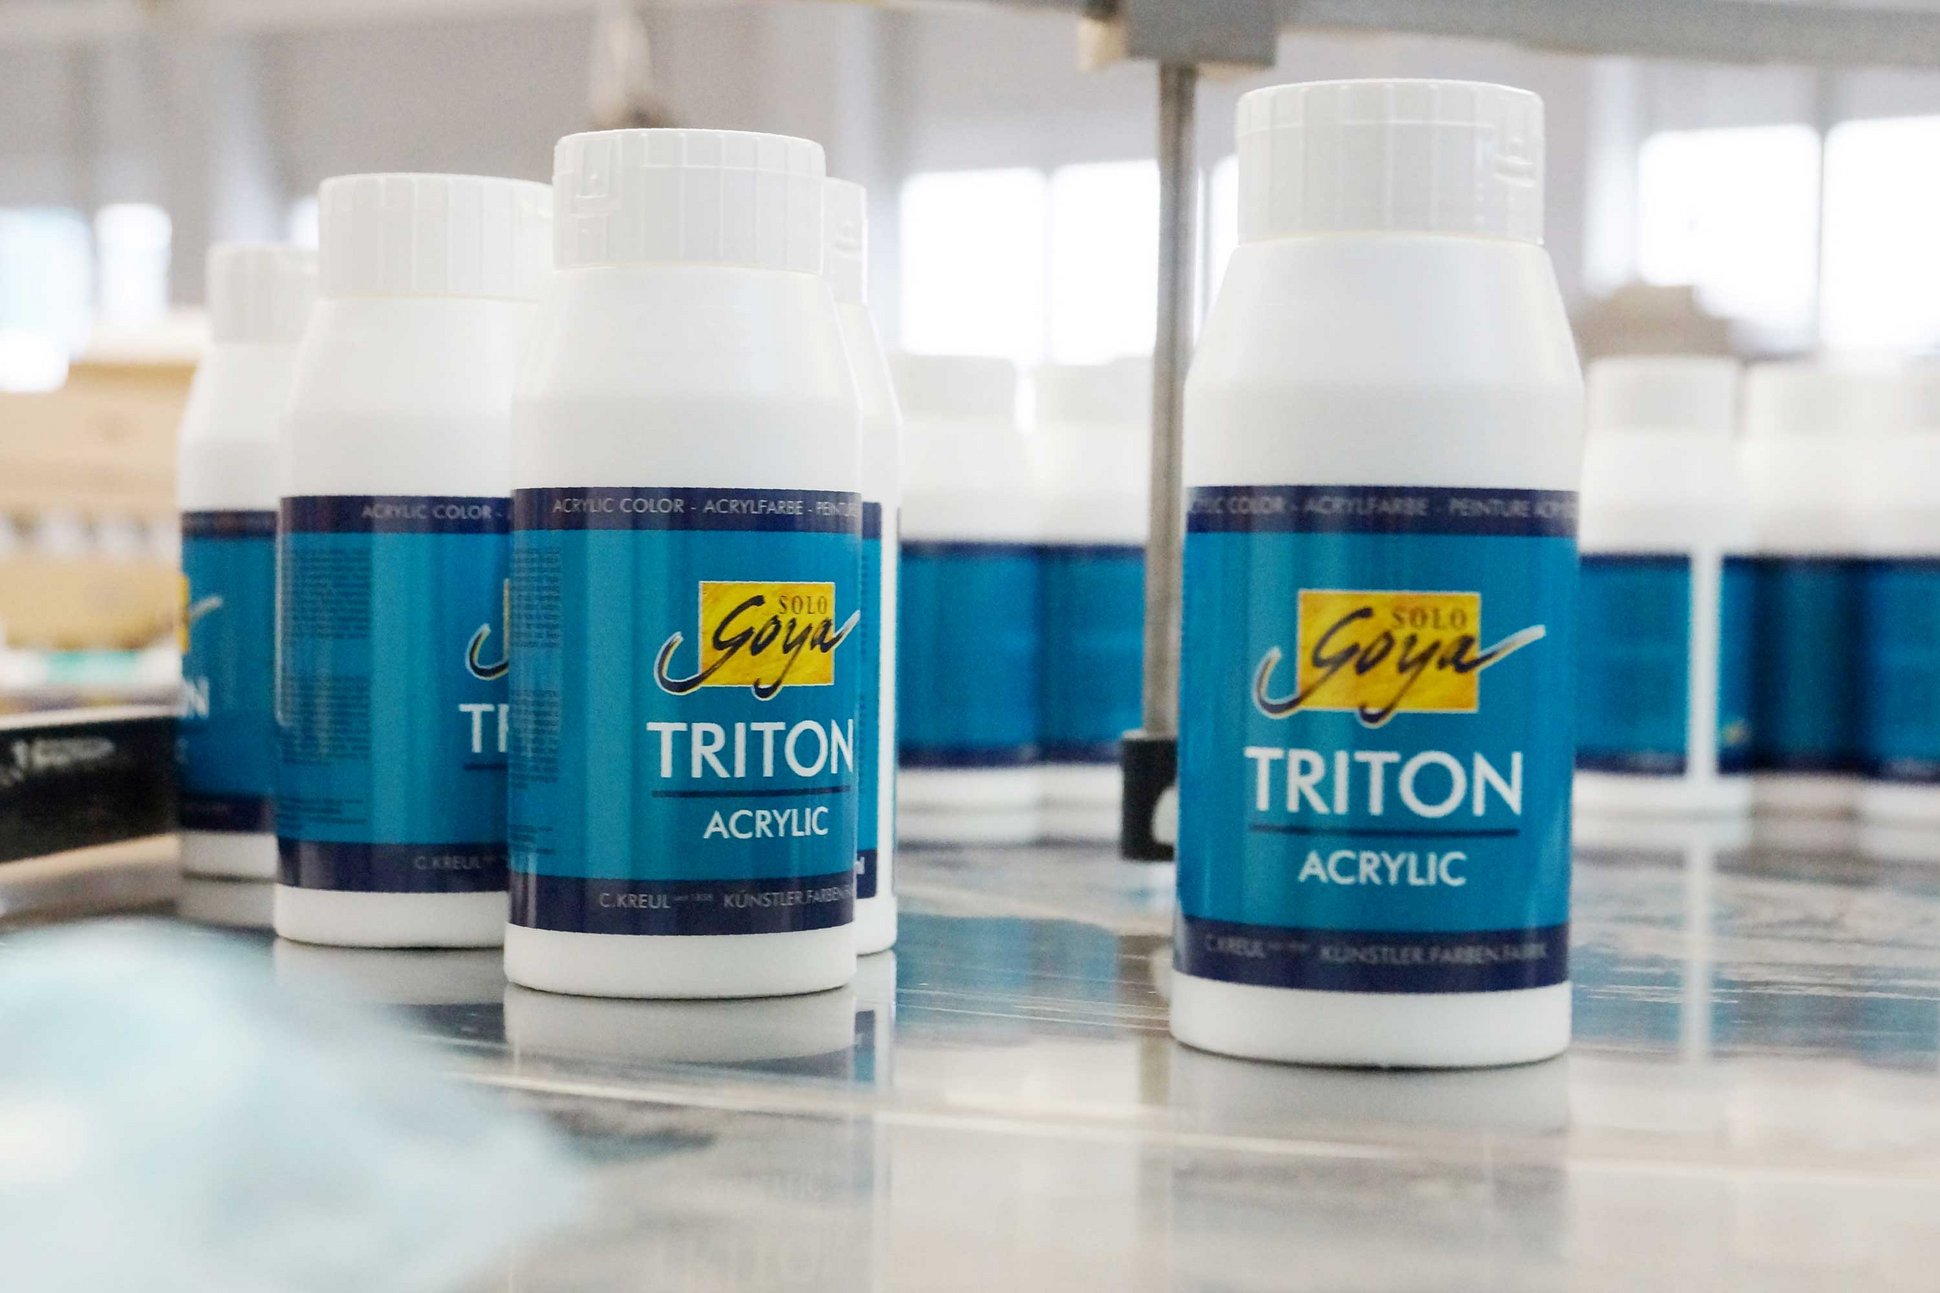 SOLO GOYA Triton Acrylic Weiss Flaschen in der Produktion